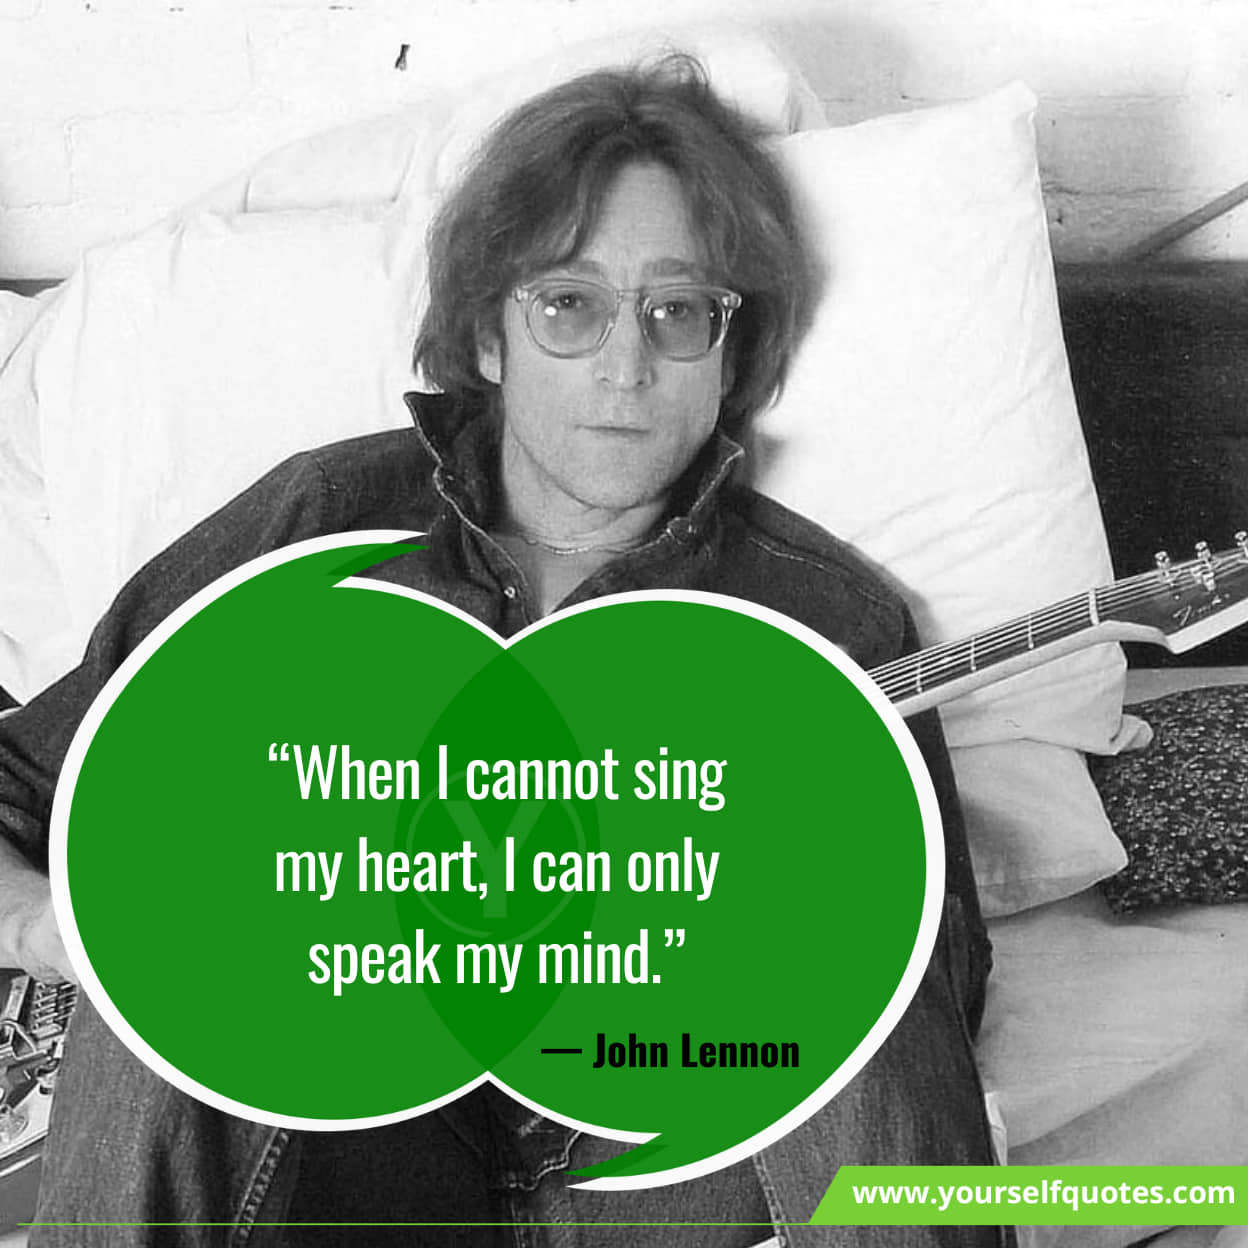 John Lennon Quotes For Success